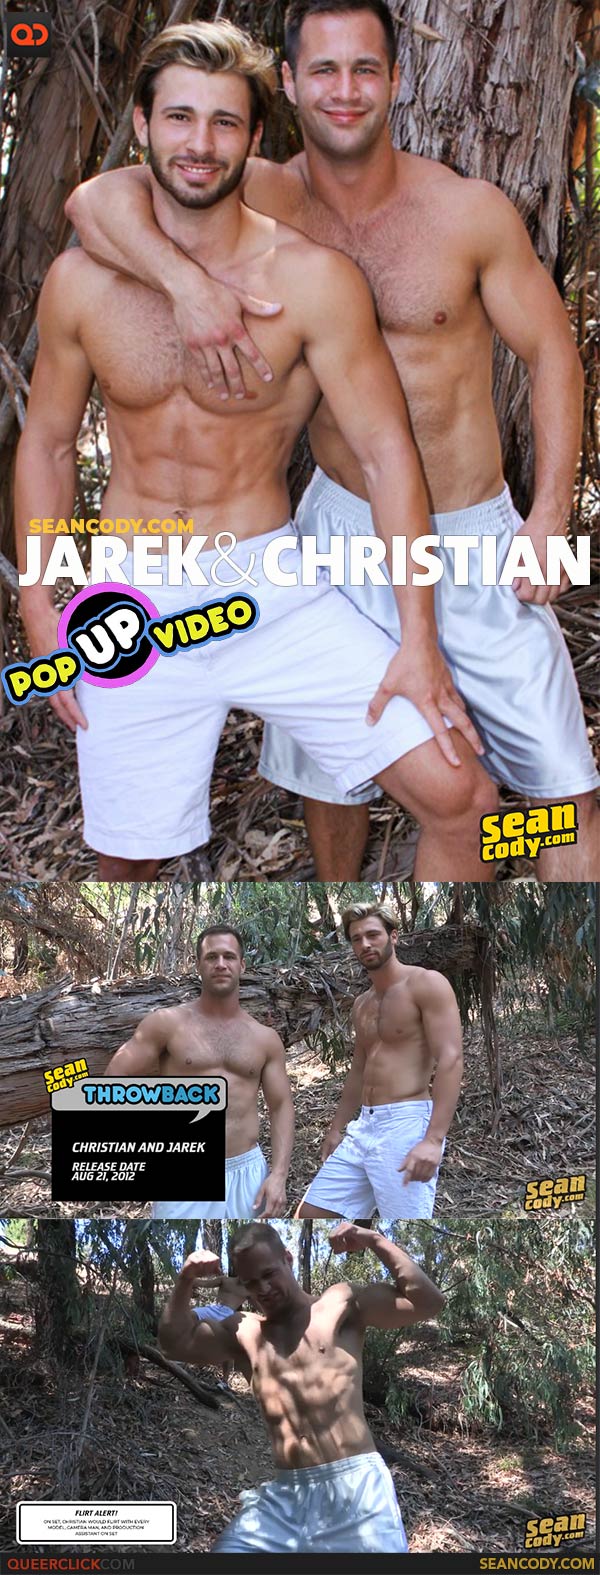 Sean Cody Jarek Fucks Christian - a Pop-Up Flashback Video pic